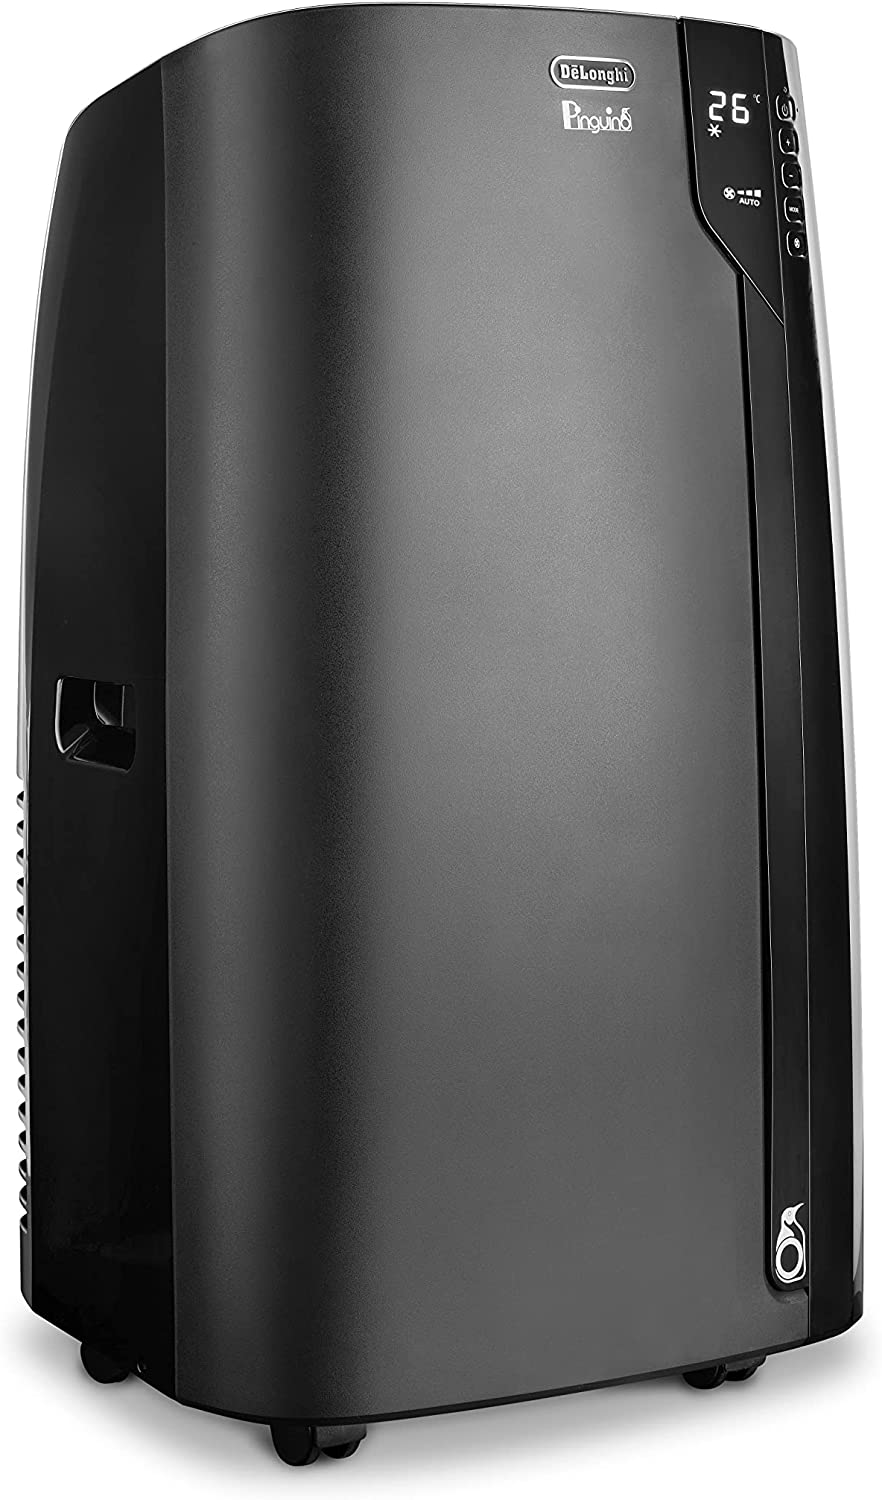 De'Longhi Pinguino PAC EX120 Silent Portable Air Conditioning Unit